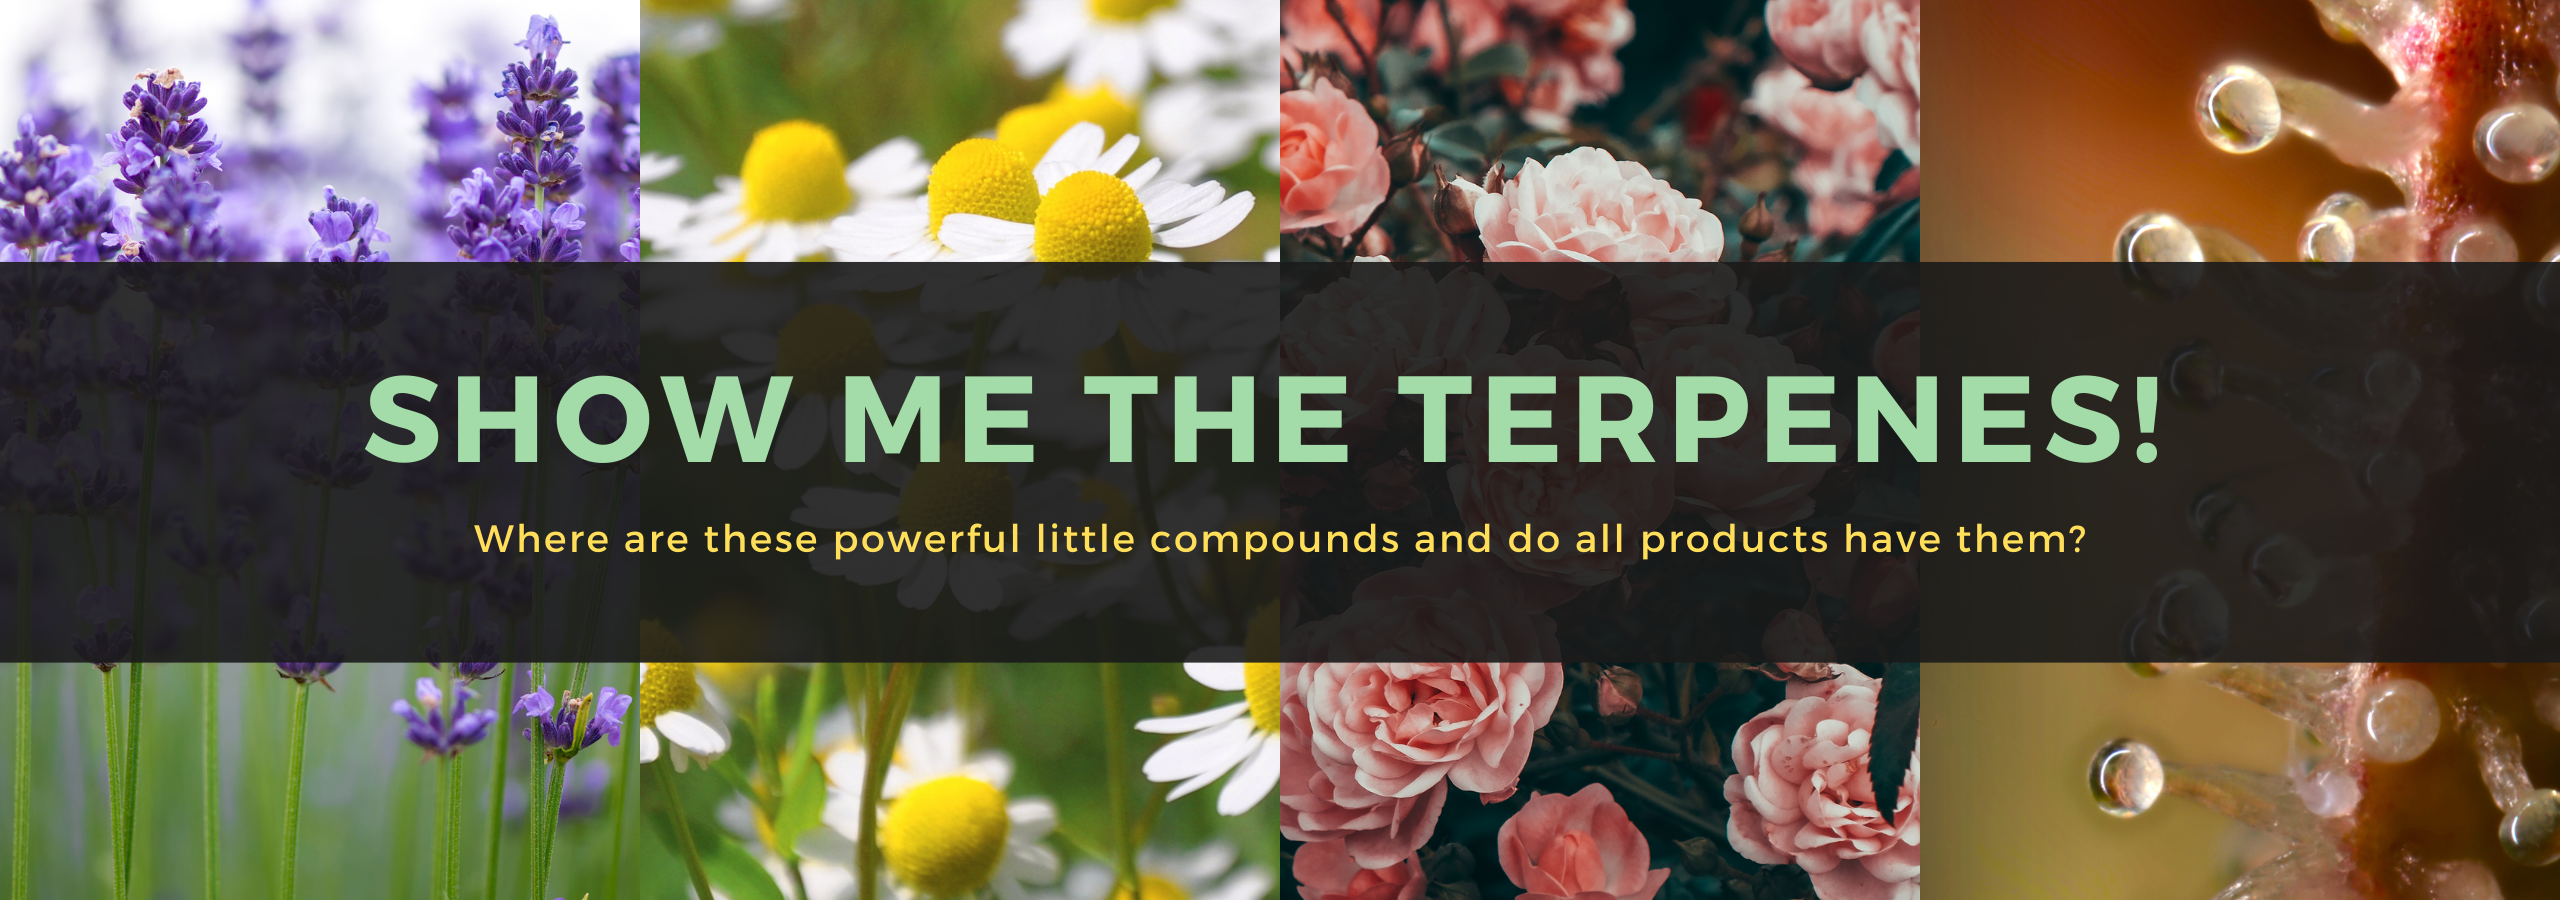 Copy-of-Copy-of-Terpenes-blog-article.png